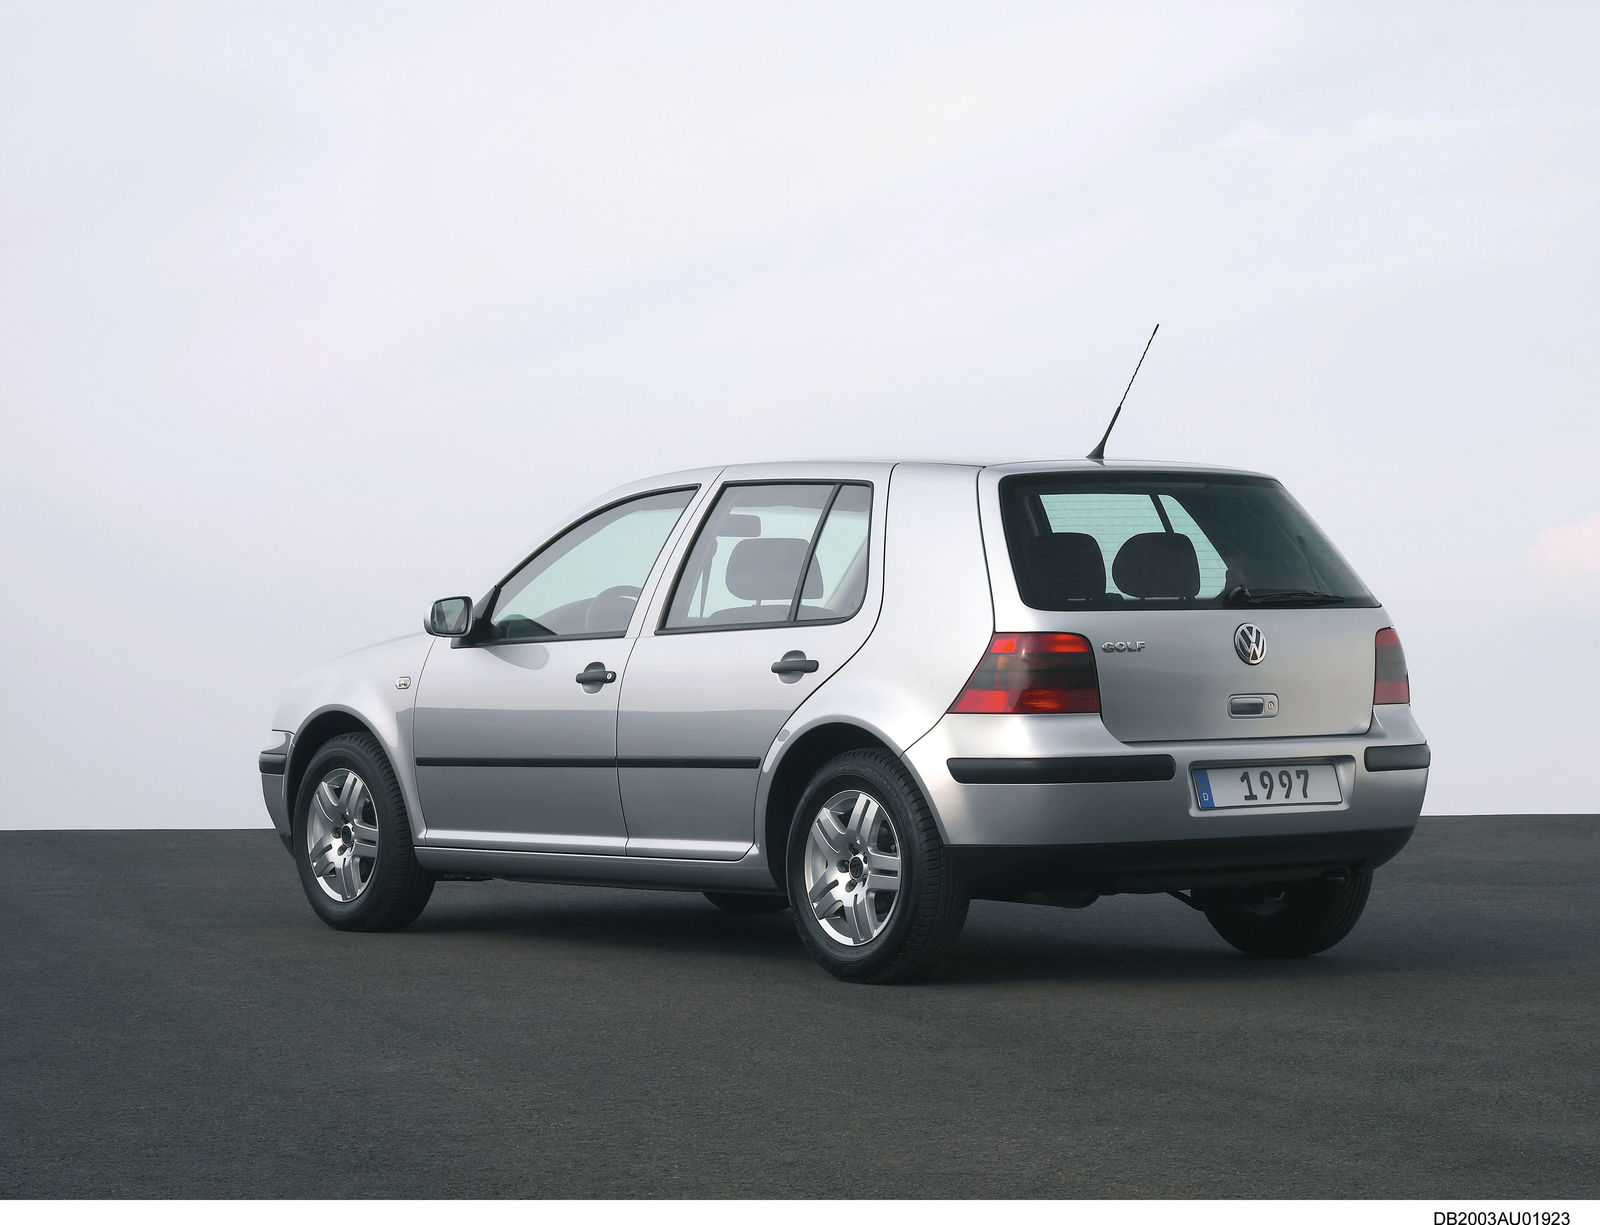 haag Begunstigde Vete The icon of tomorrow: Golf IV – 1997 to 2003 | Volkswagen Newsroom